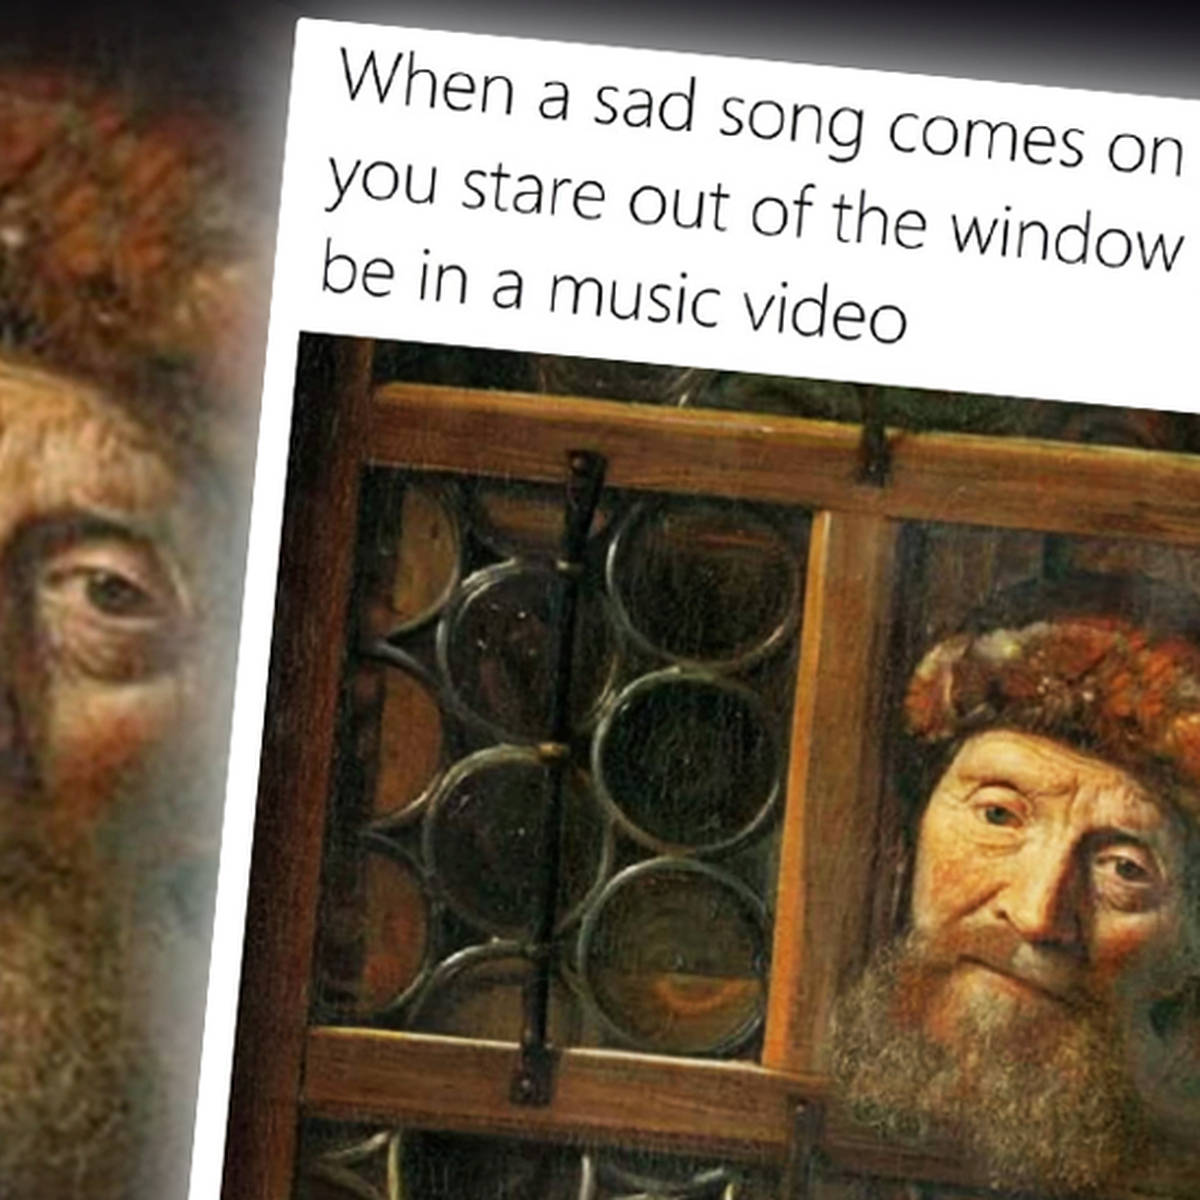 25 classical art memes guaranteed to make you cackle - Classic FM